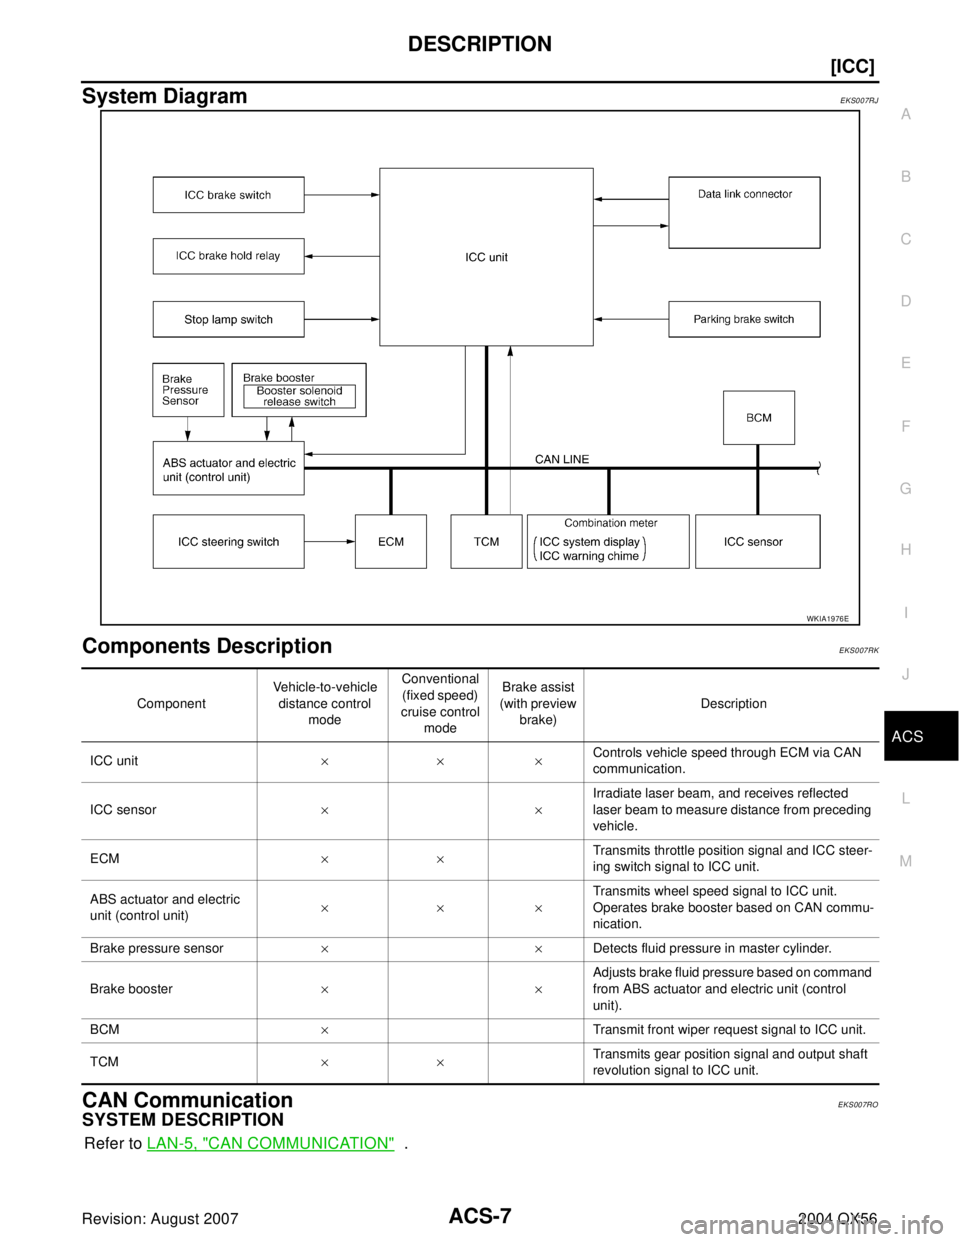 INFINITI QX56 2004  Factory Service Manual DESCRIPTION
ACS-7
[ICC]
C
D
E
F
G
H
I
J
L
MA
B
ACS
Revision: August 20072004 QX56
System DiagramEKS007RJ
Components DescriptionEKS007RK
CAN CommunicationEKS007RO
SYSTEM DESCRIPTION
Refer to LAN-5, "CA